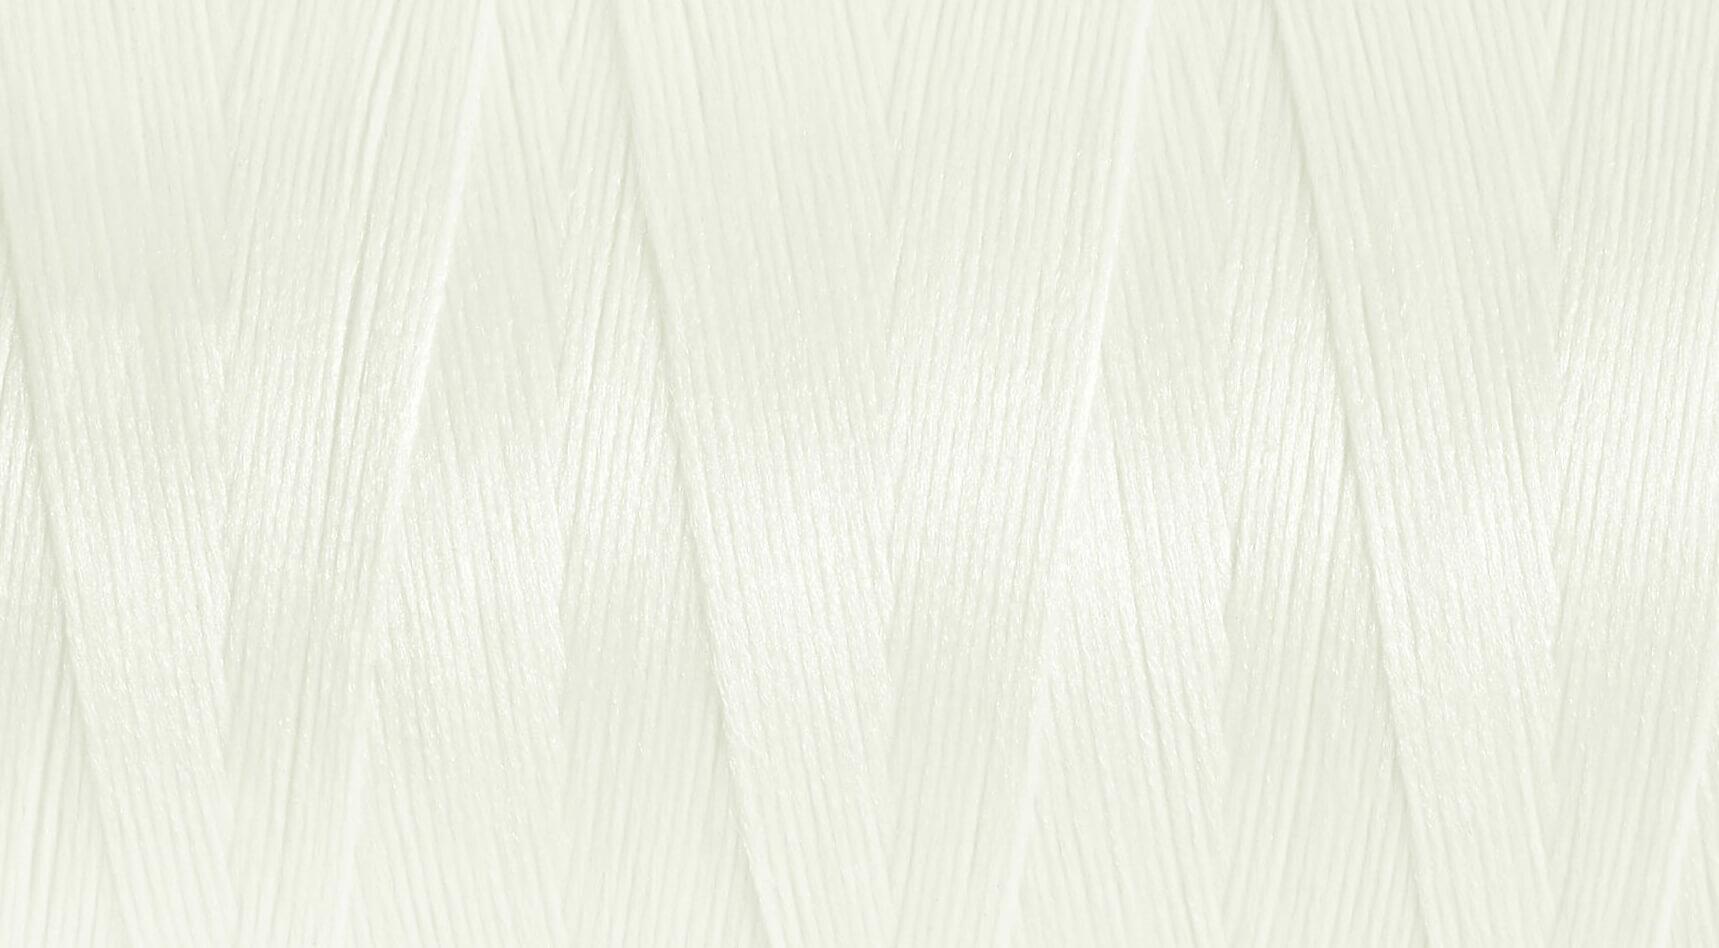 Gutermann Bulky-lock 160 2000m overlocking thread in colour number 111 Bridal White